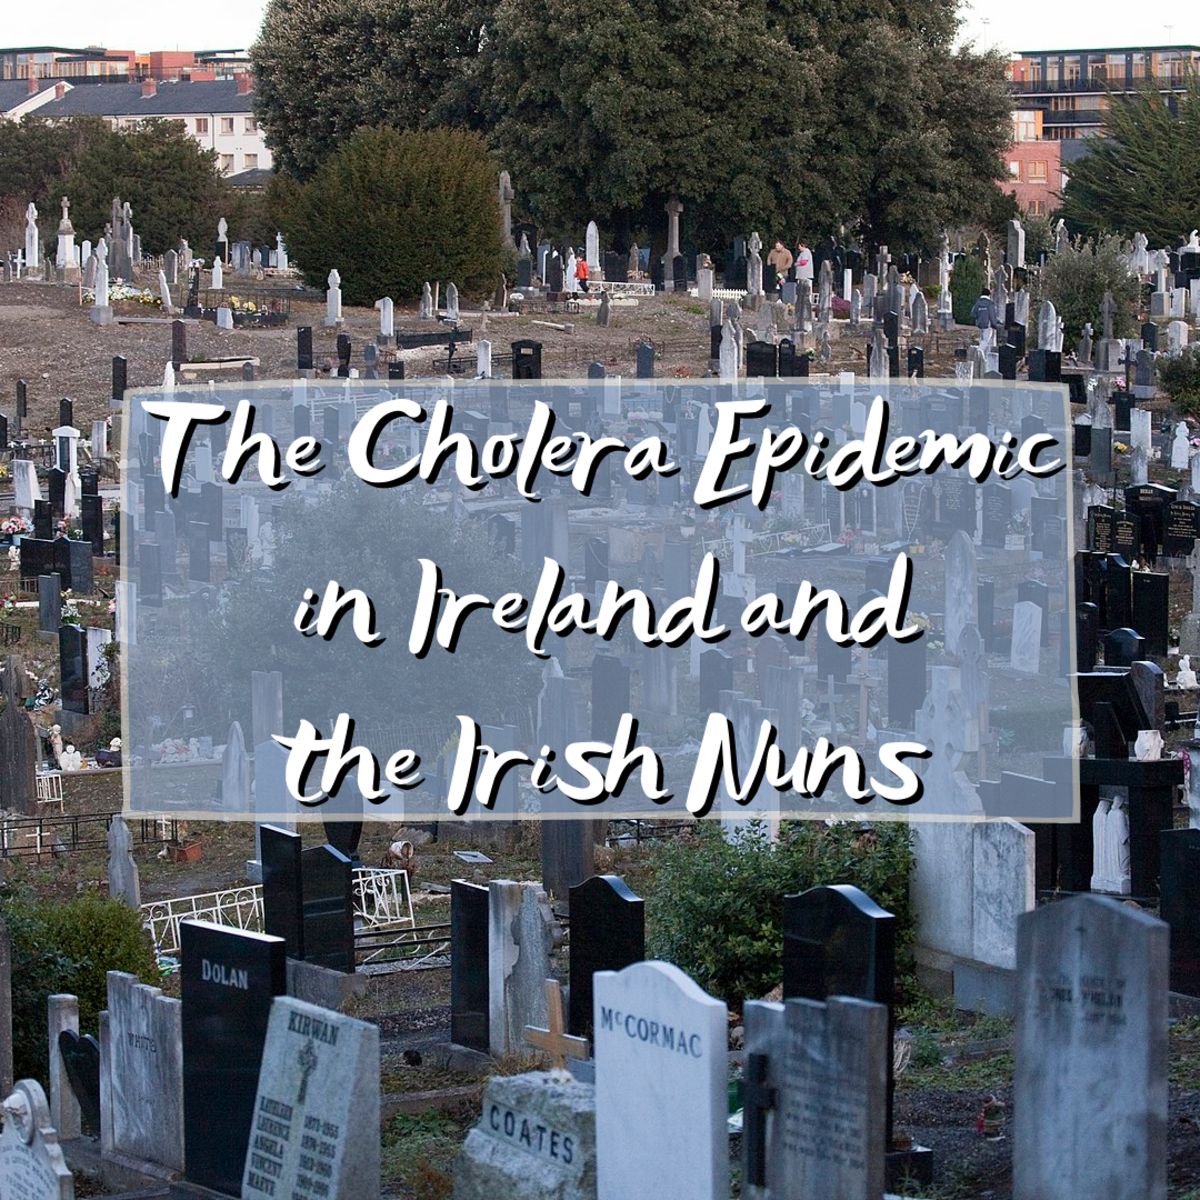 The Cholera Epidemic in Ireland and the Irish Nuns